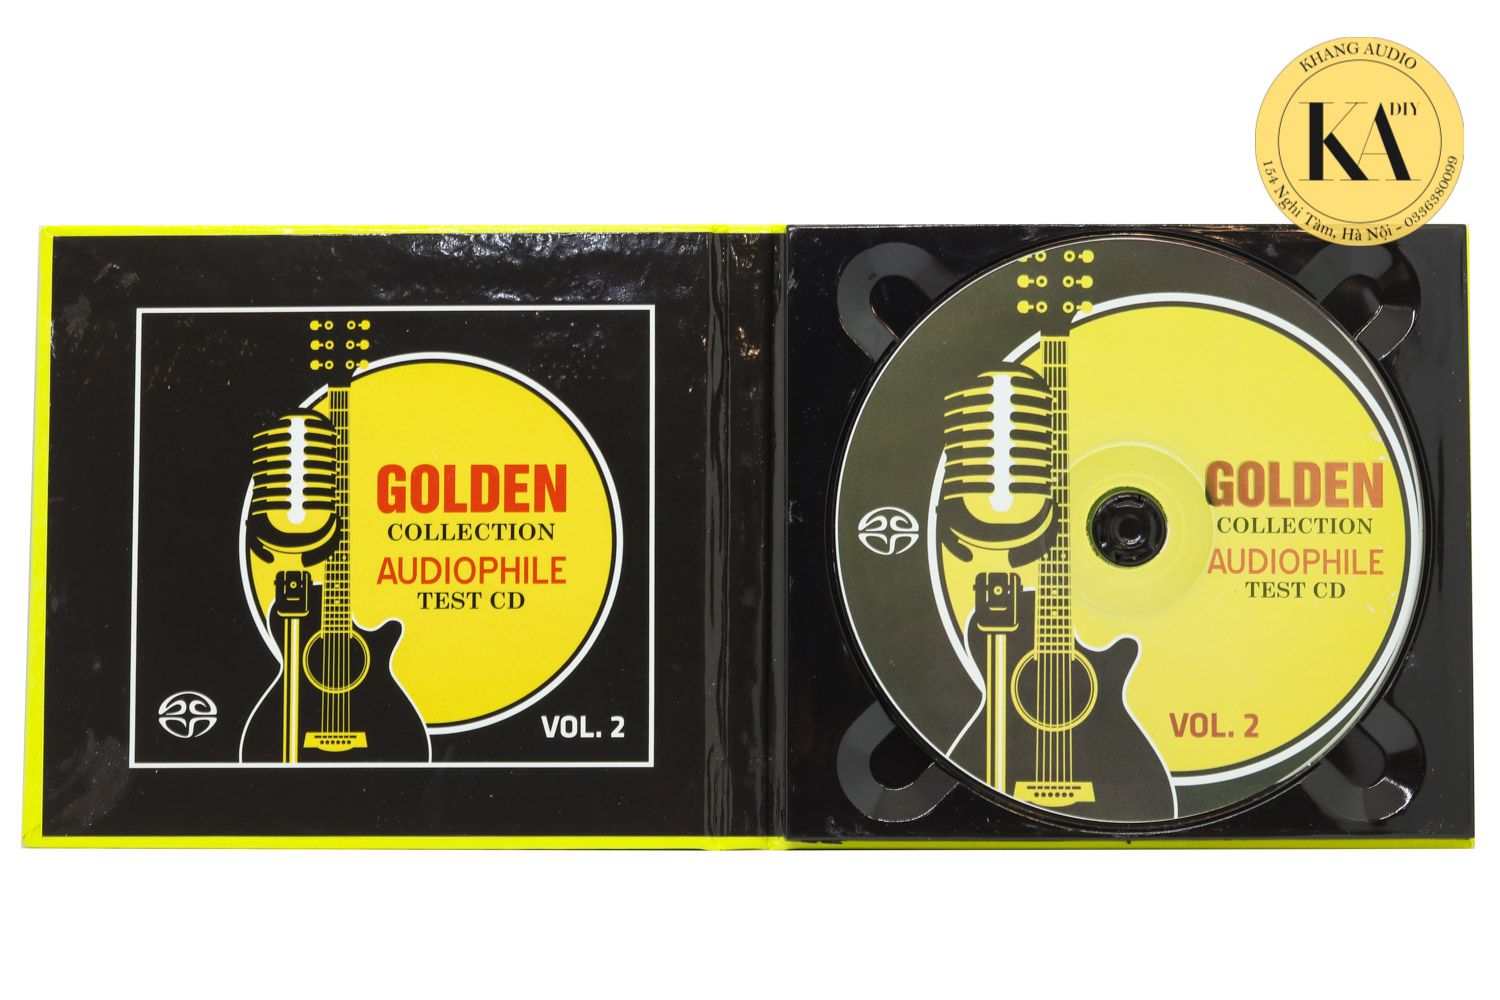 Golden Collection Audiophile Test CD Vol.2 Khang Audio 0336380099